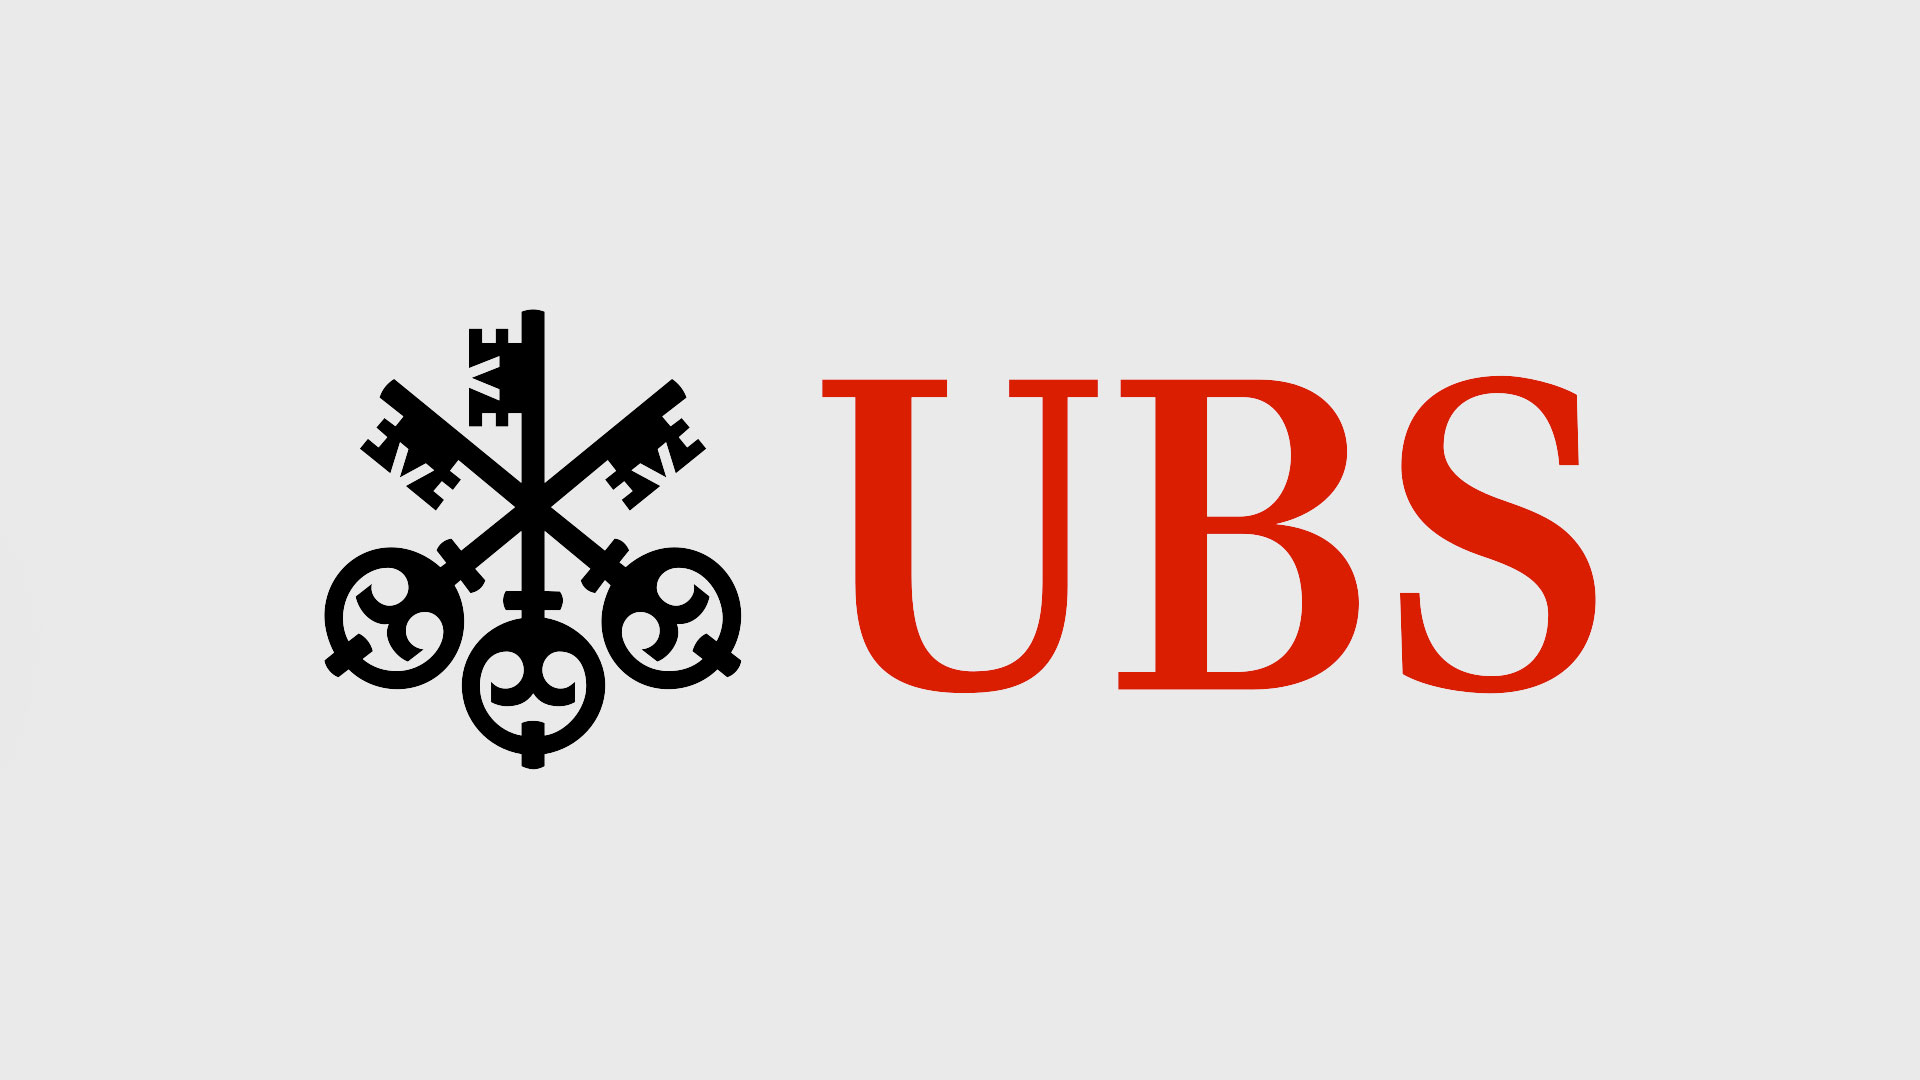 UBS2